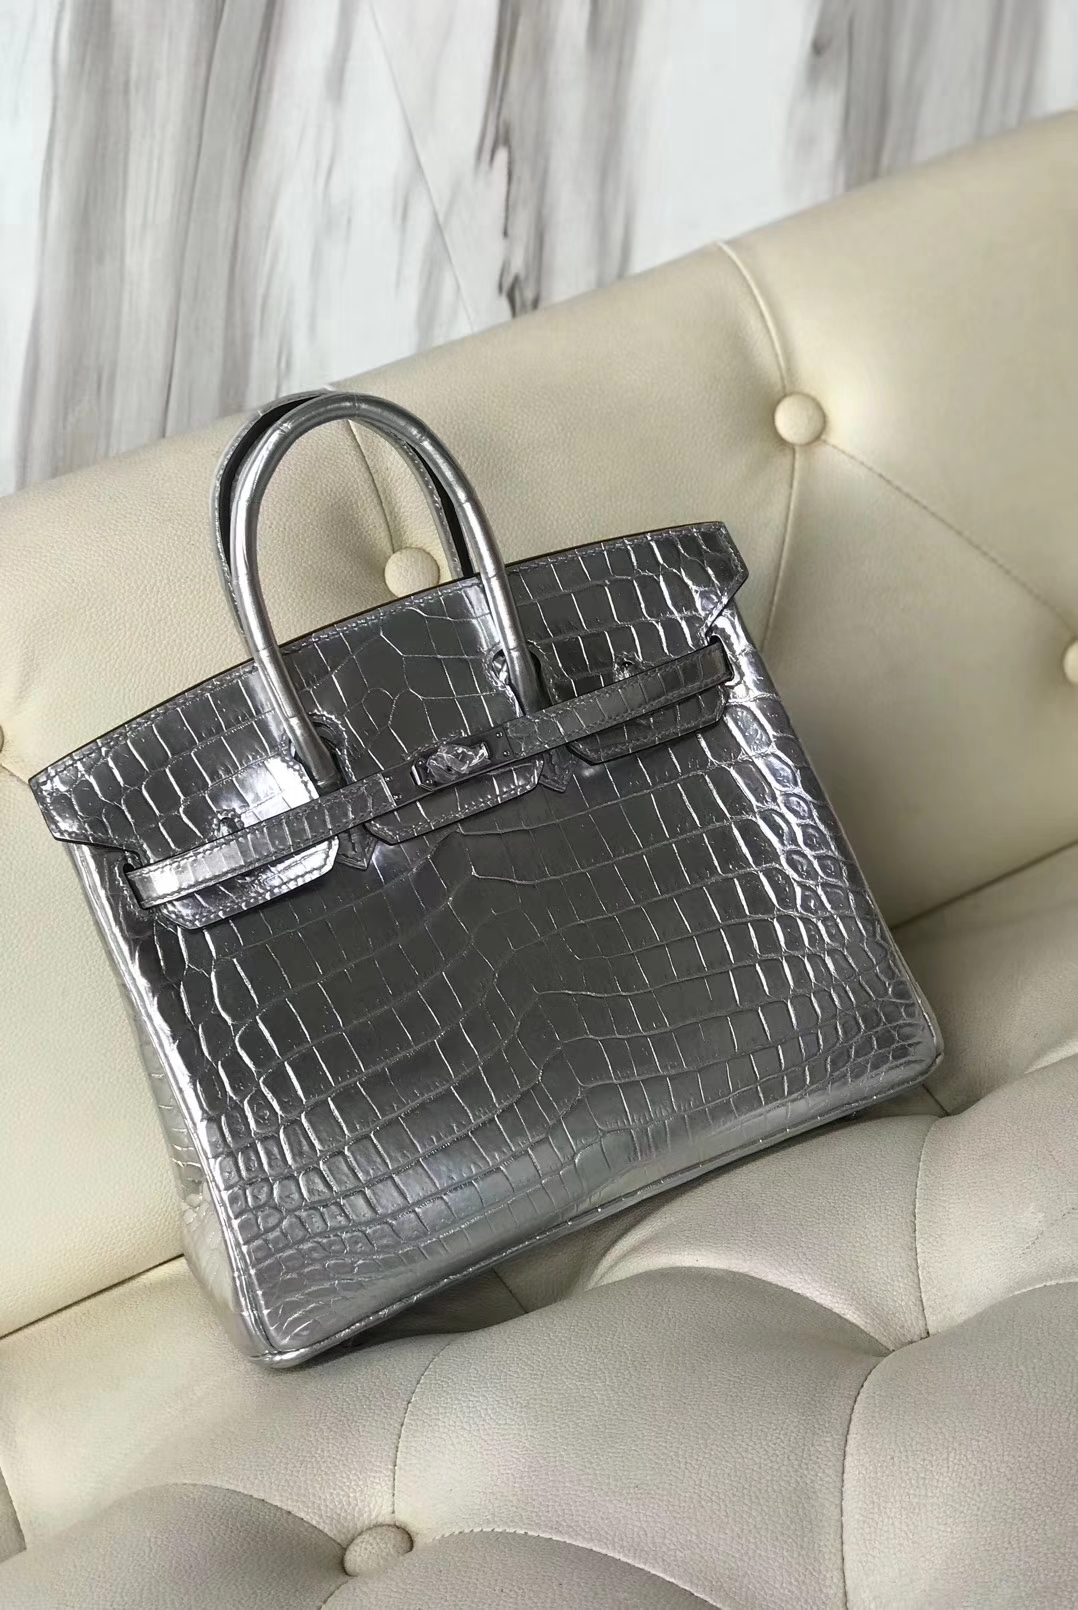 Luxury Hermes Silver Crocodile Shiny Leather Birkin25CM Tote Bag Silver Hardware